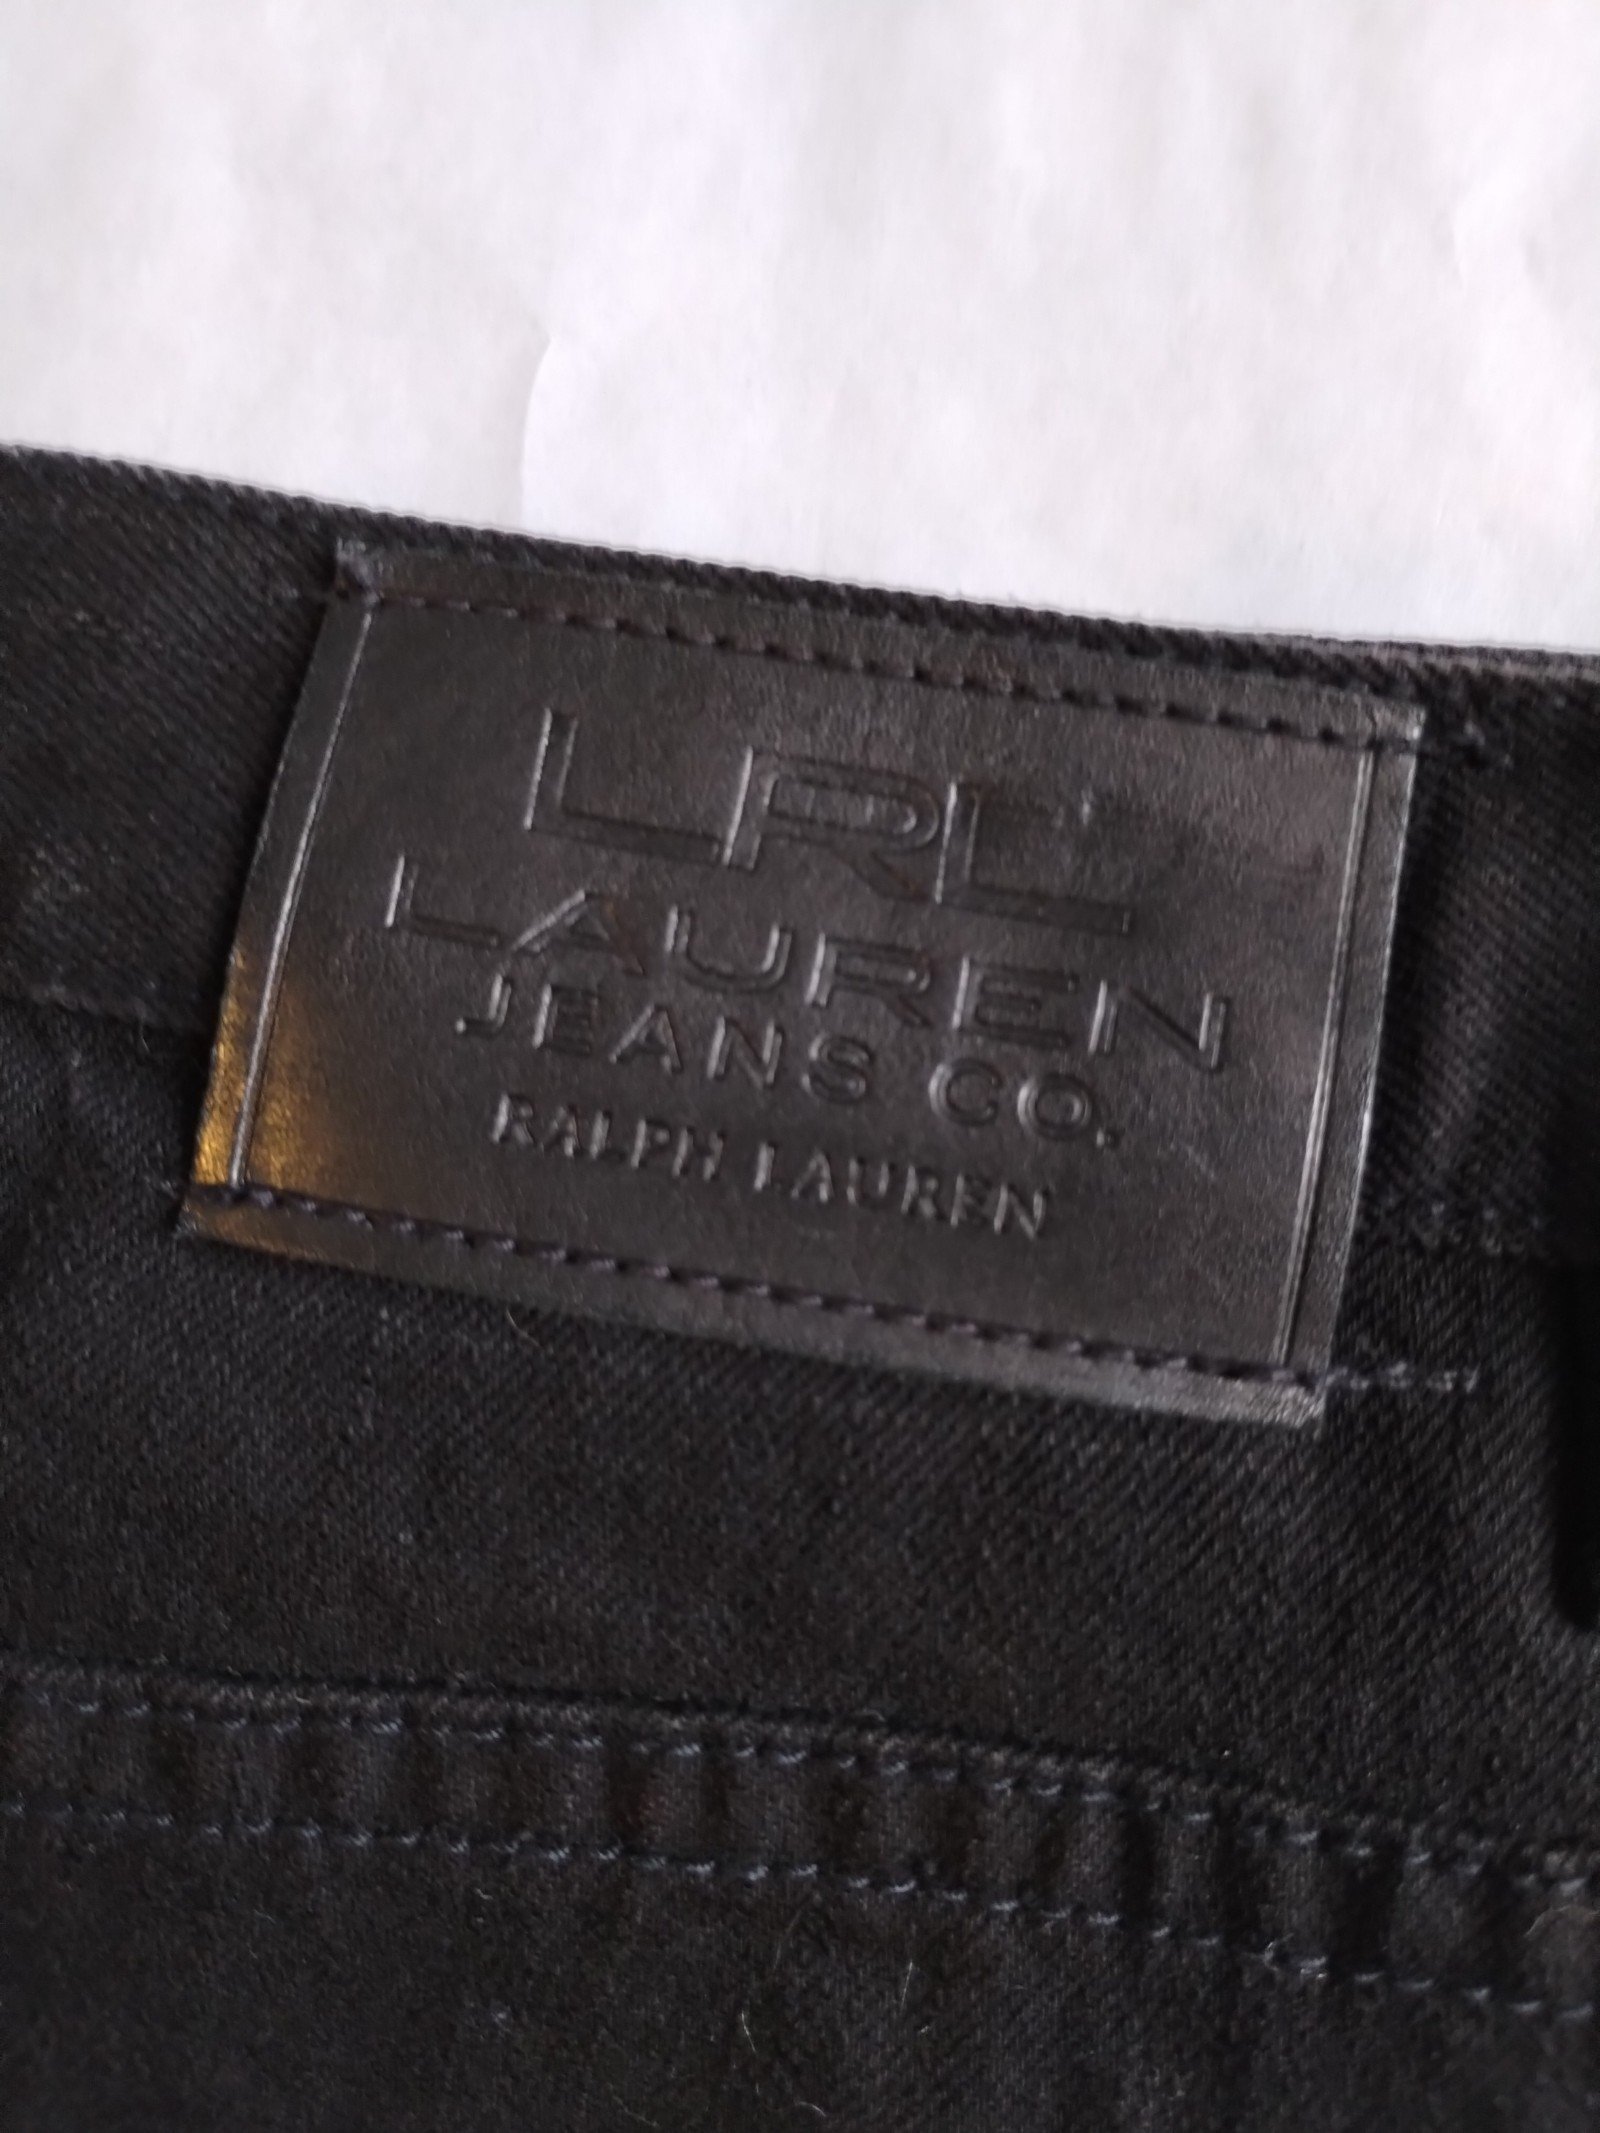 cheapest place to buy  LAUREN RALPH LAUREN Women´s Black Jean Skirt Size 14 KN6Z7v1JD Outlet Store